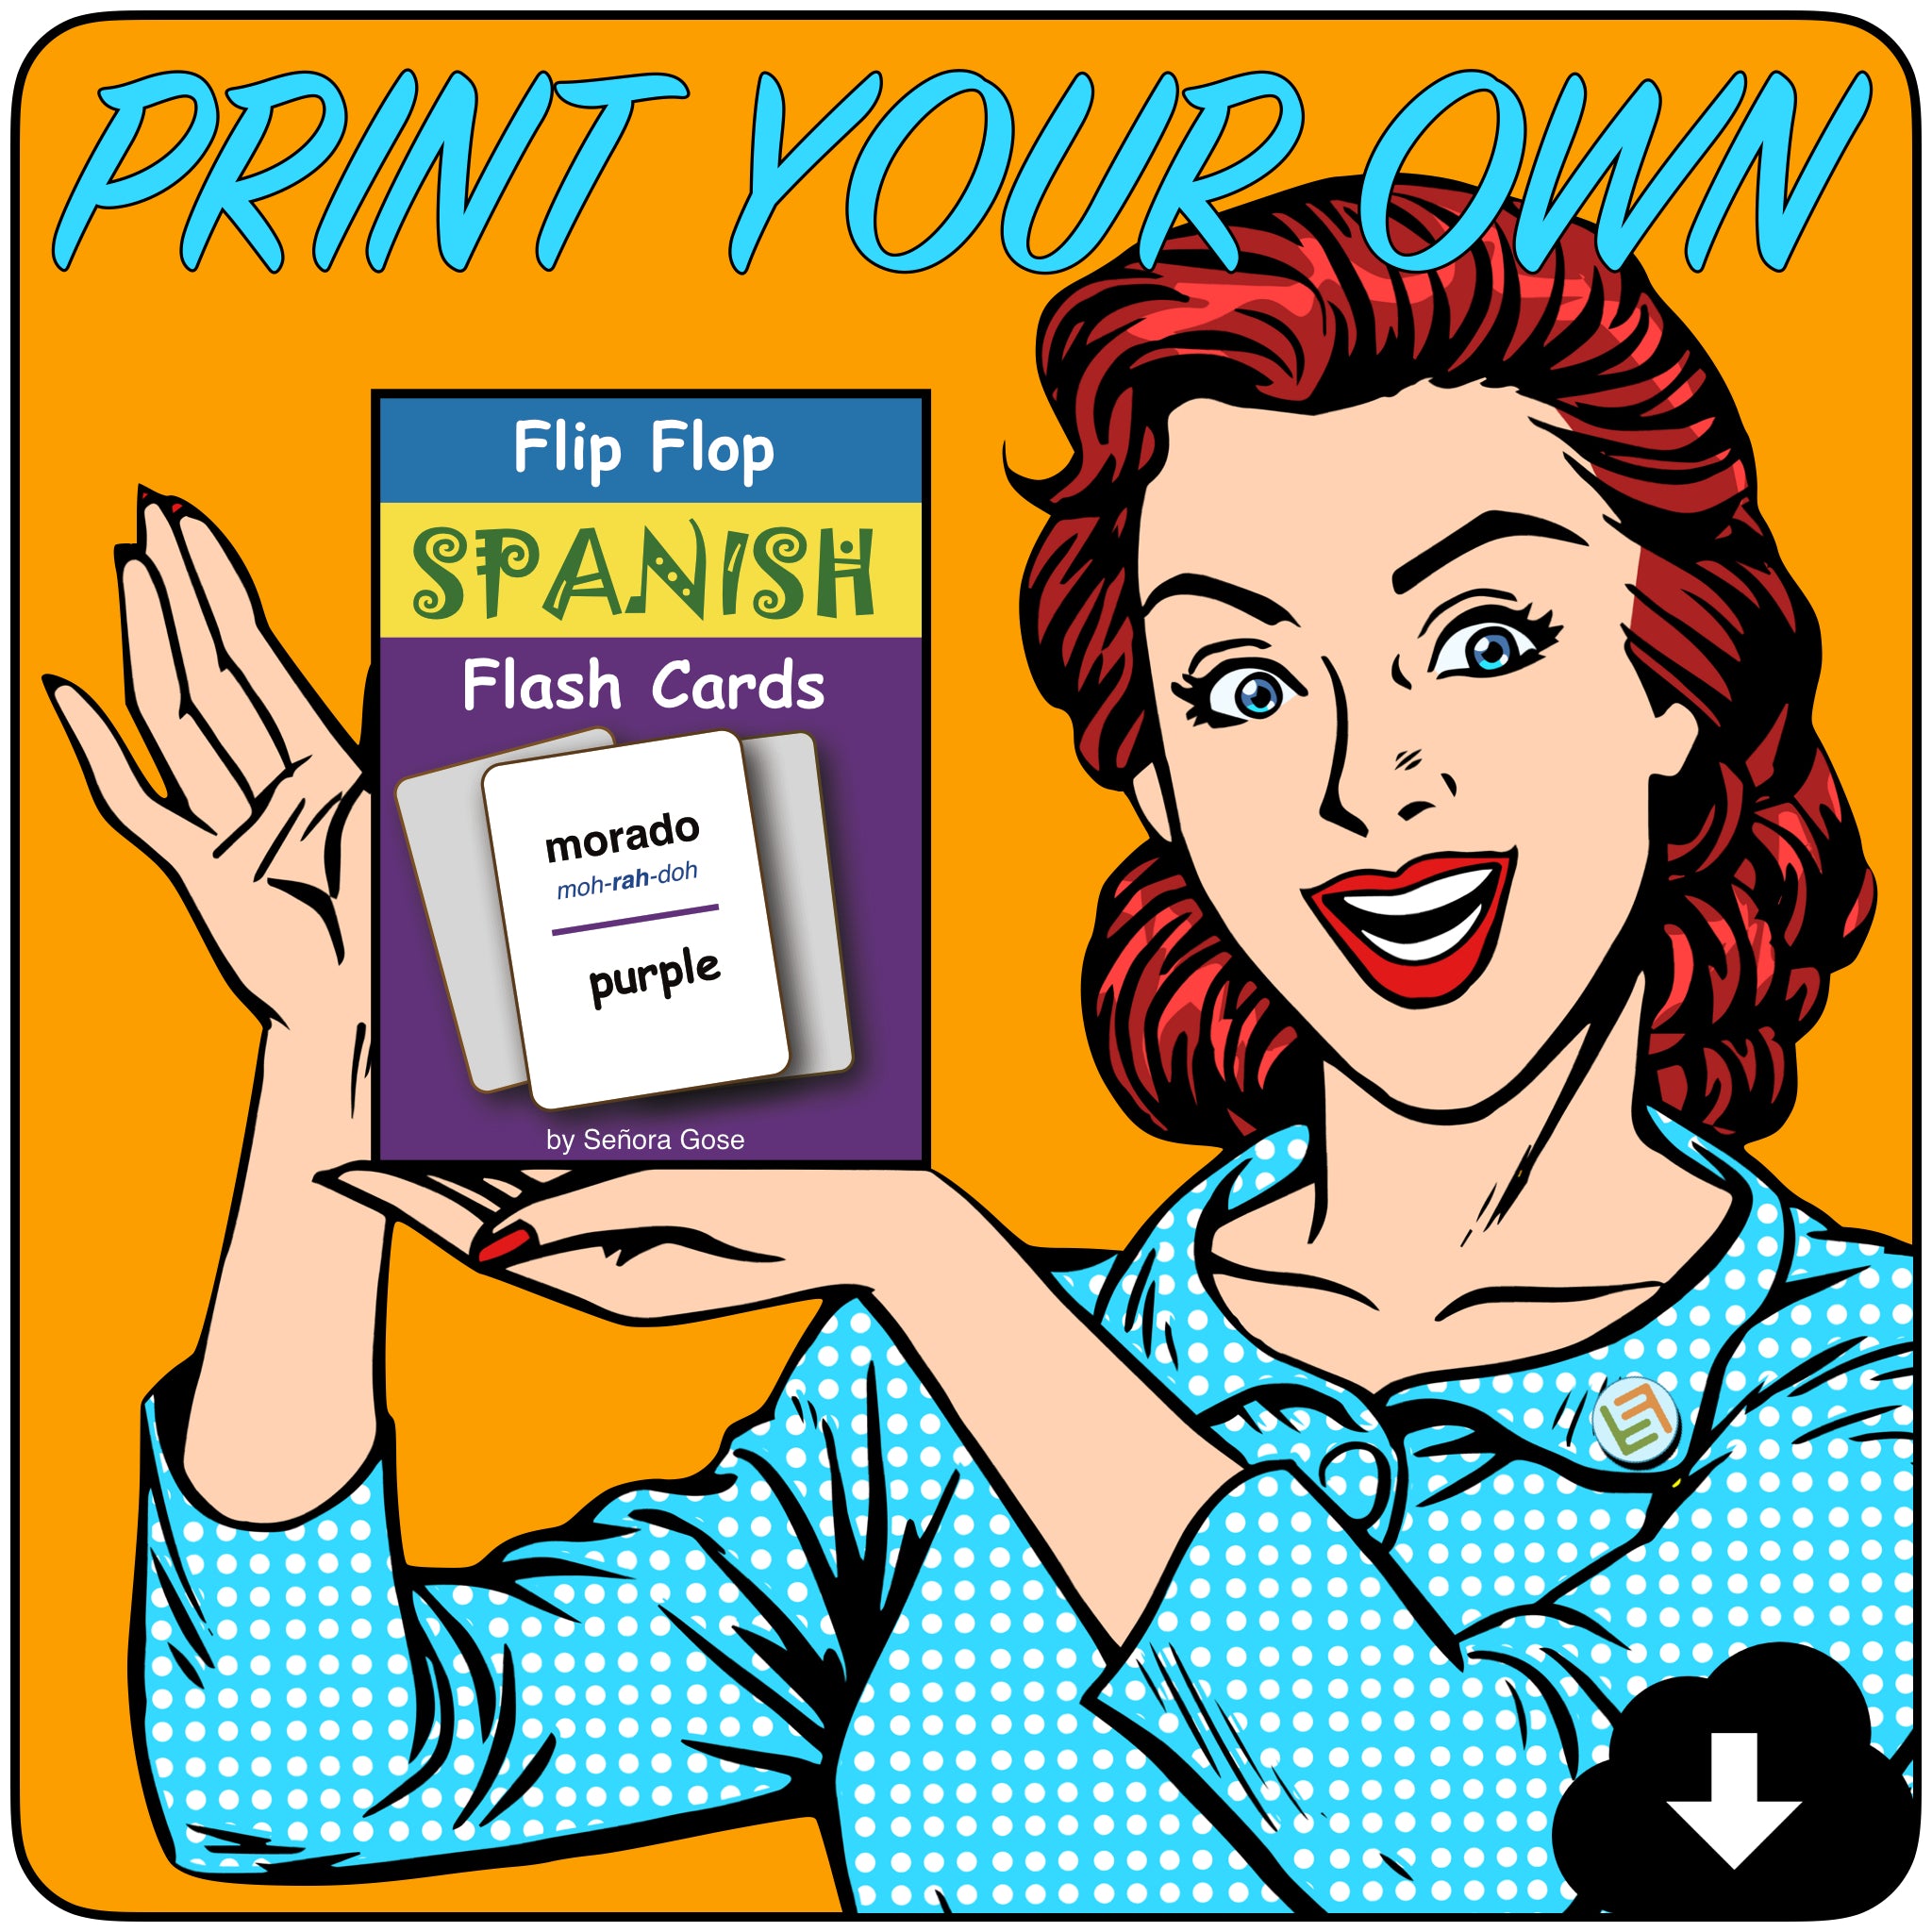 Flip Flop Spanish Flash Cards: Morado (Printable)